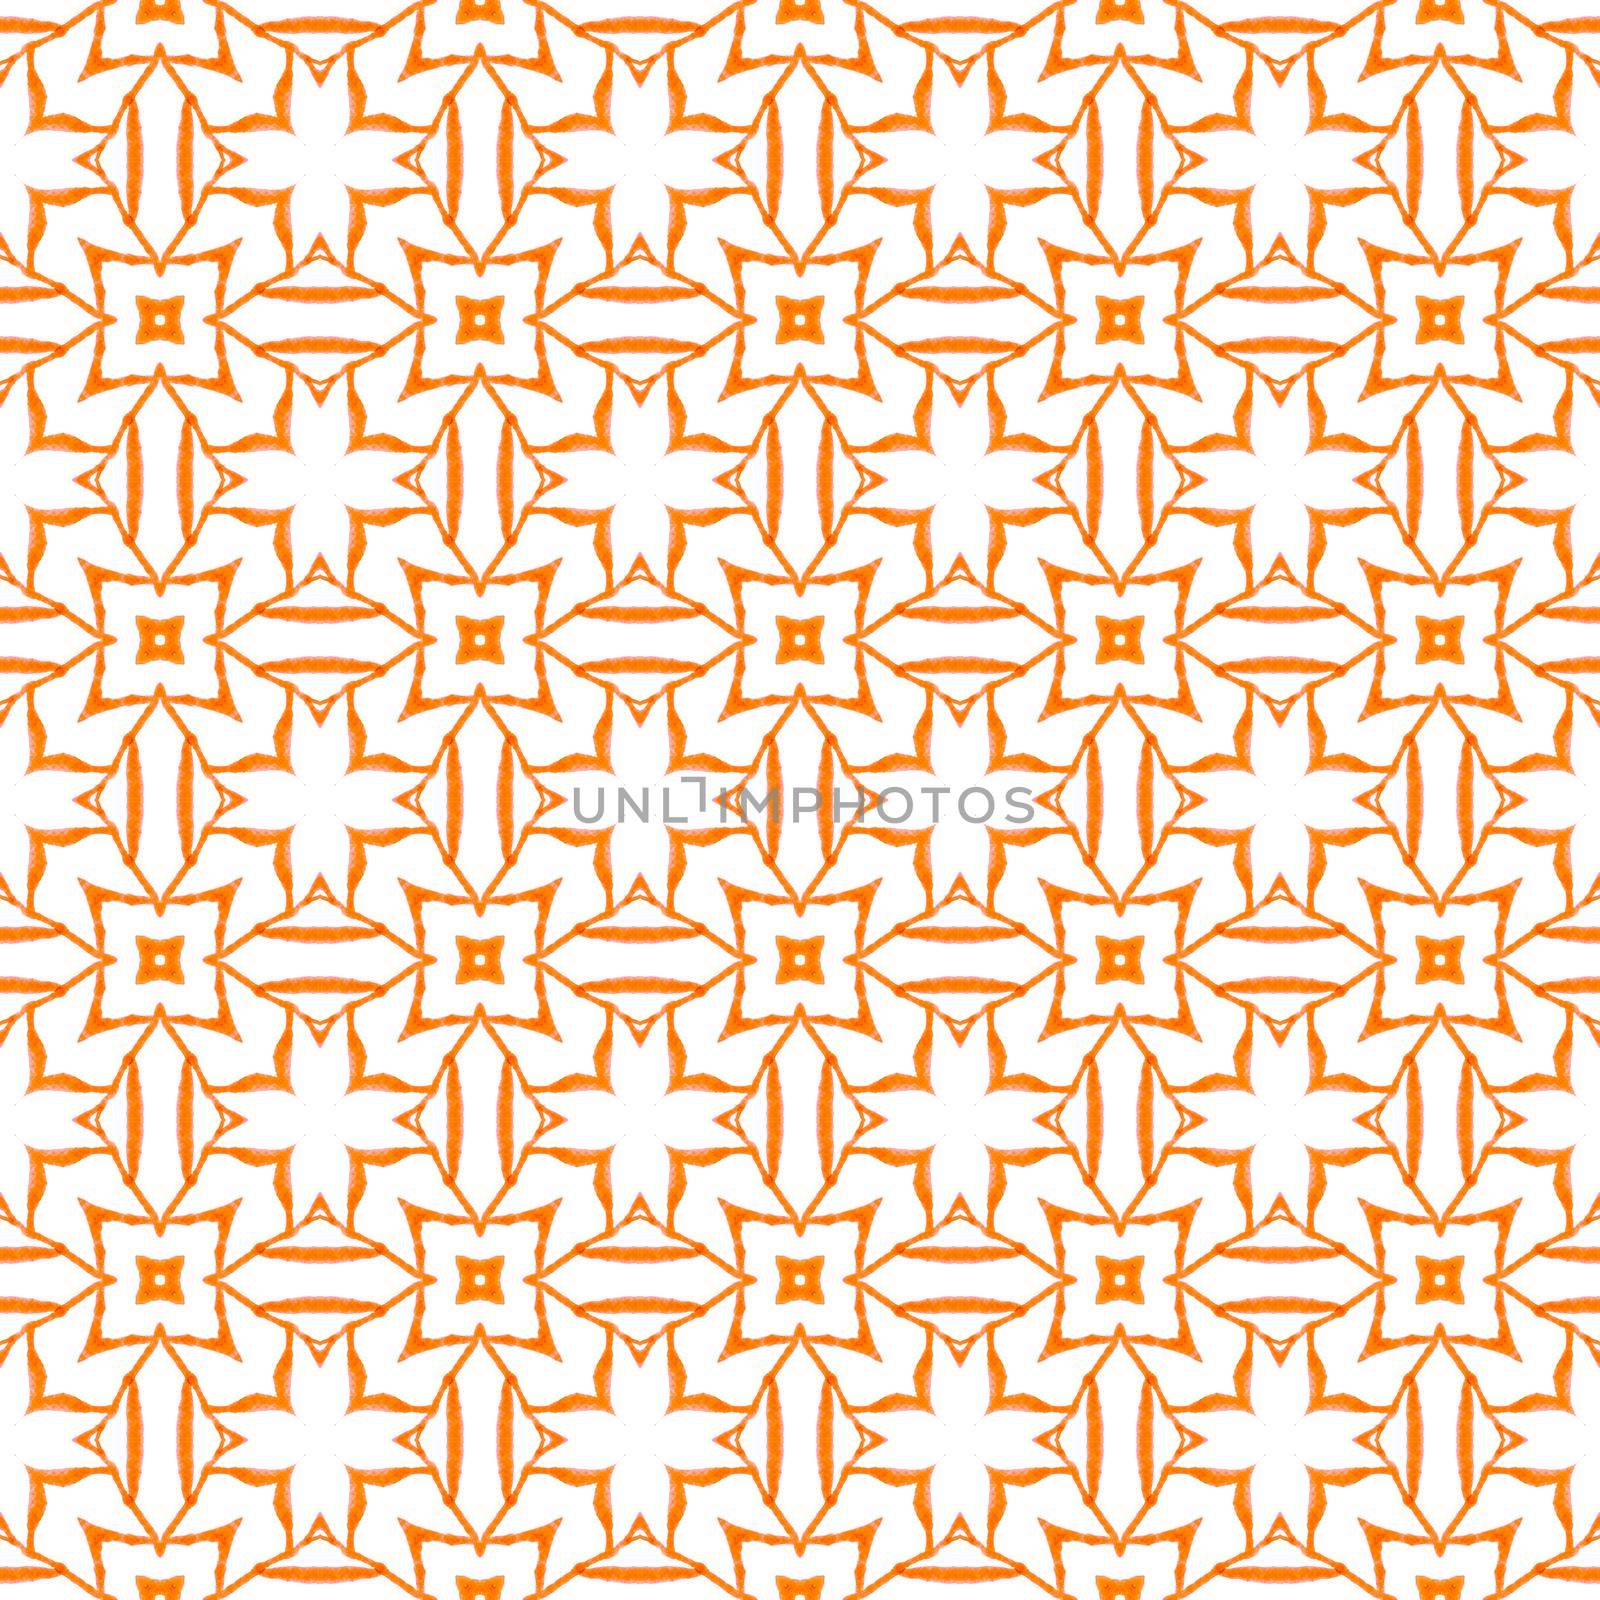 Striped hand drawn design. Orange artistic boho chic summer design. Repeating striped hand drawn border. Textile ready perfect print, swimwear fabric, wallpaper, wrapping.